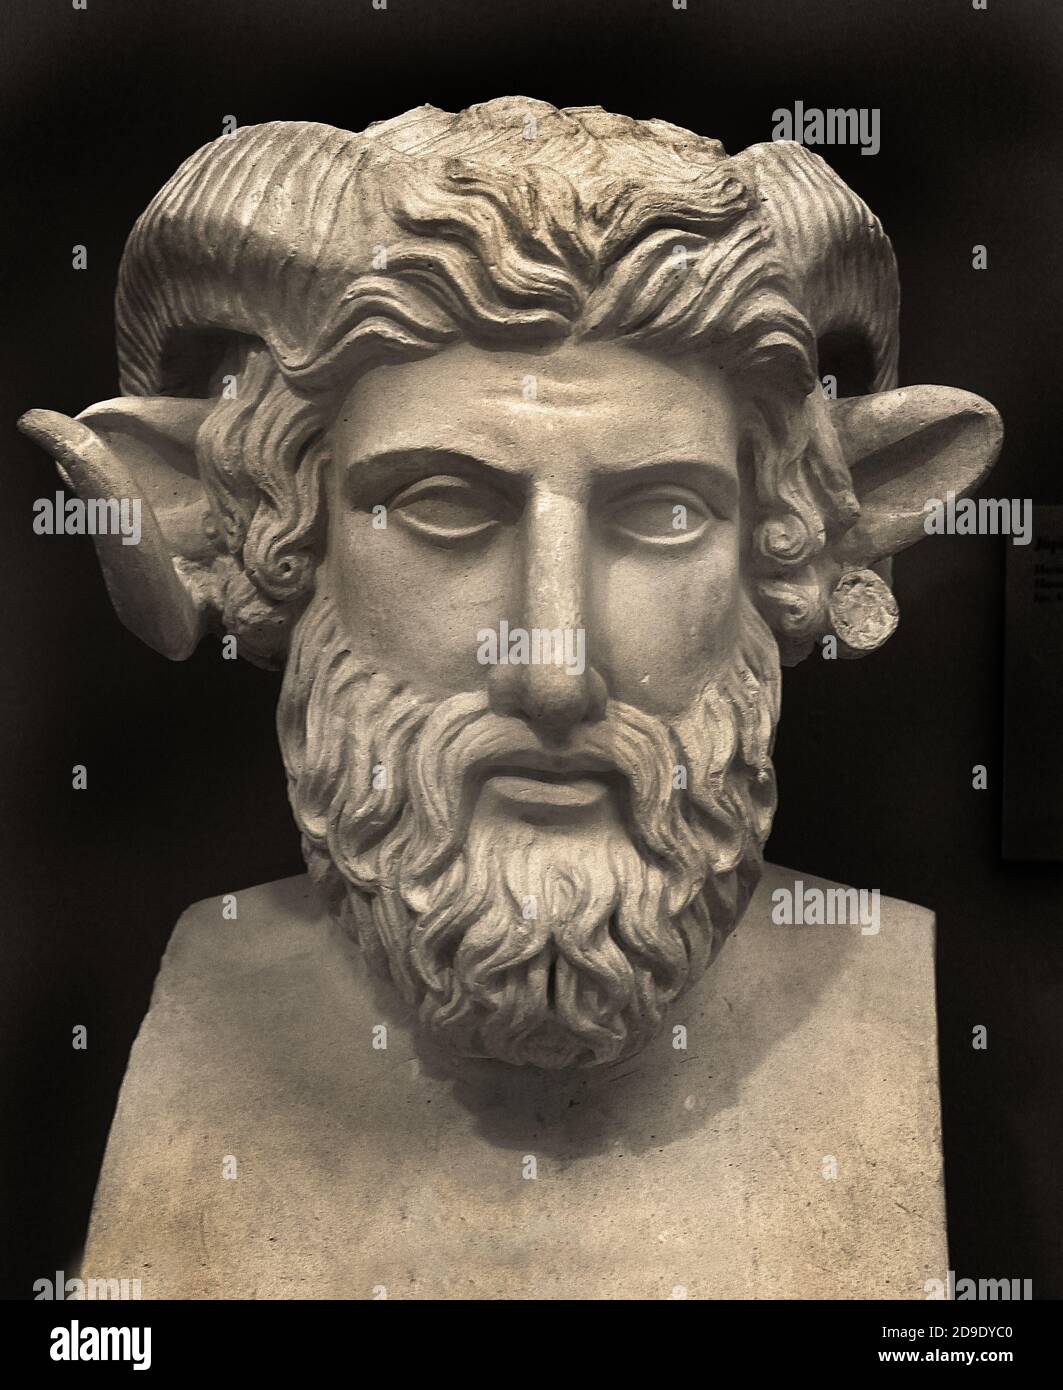 Yesos del siglo xviii del museo herculanense fotografías e alta resolución - Alamy